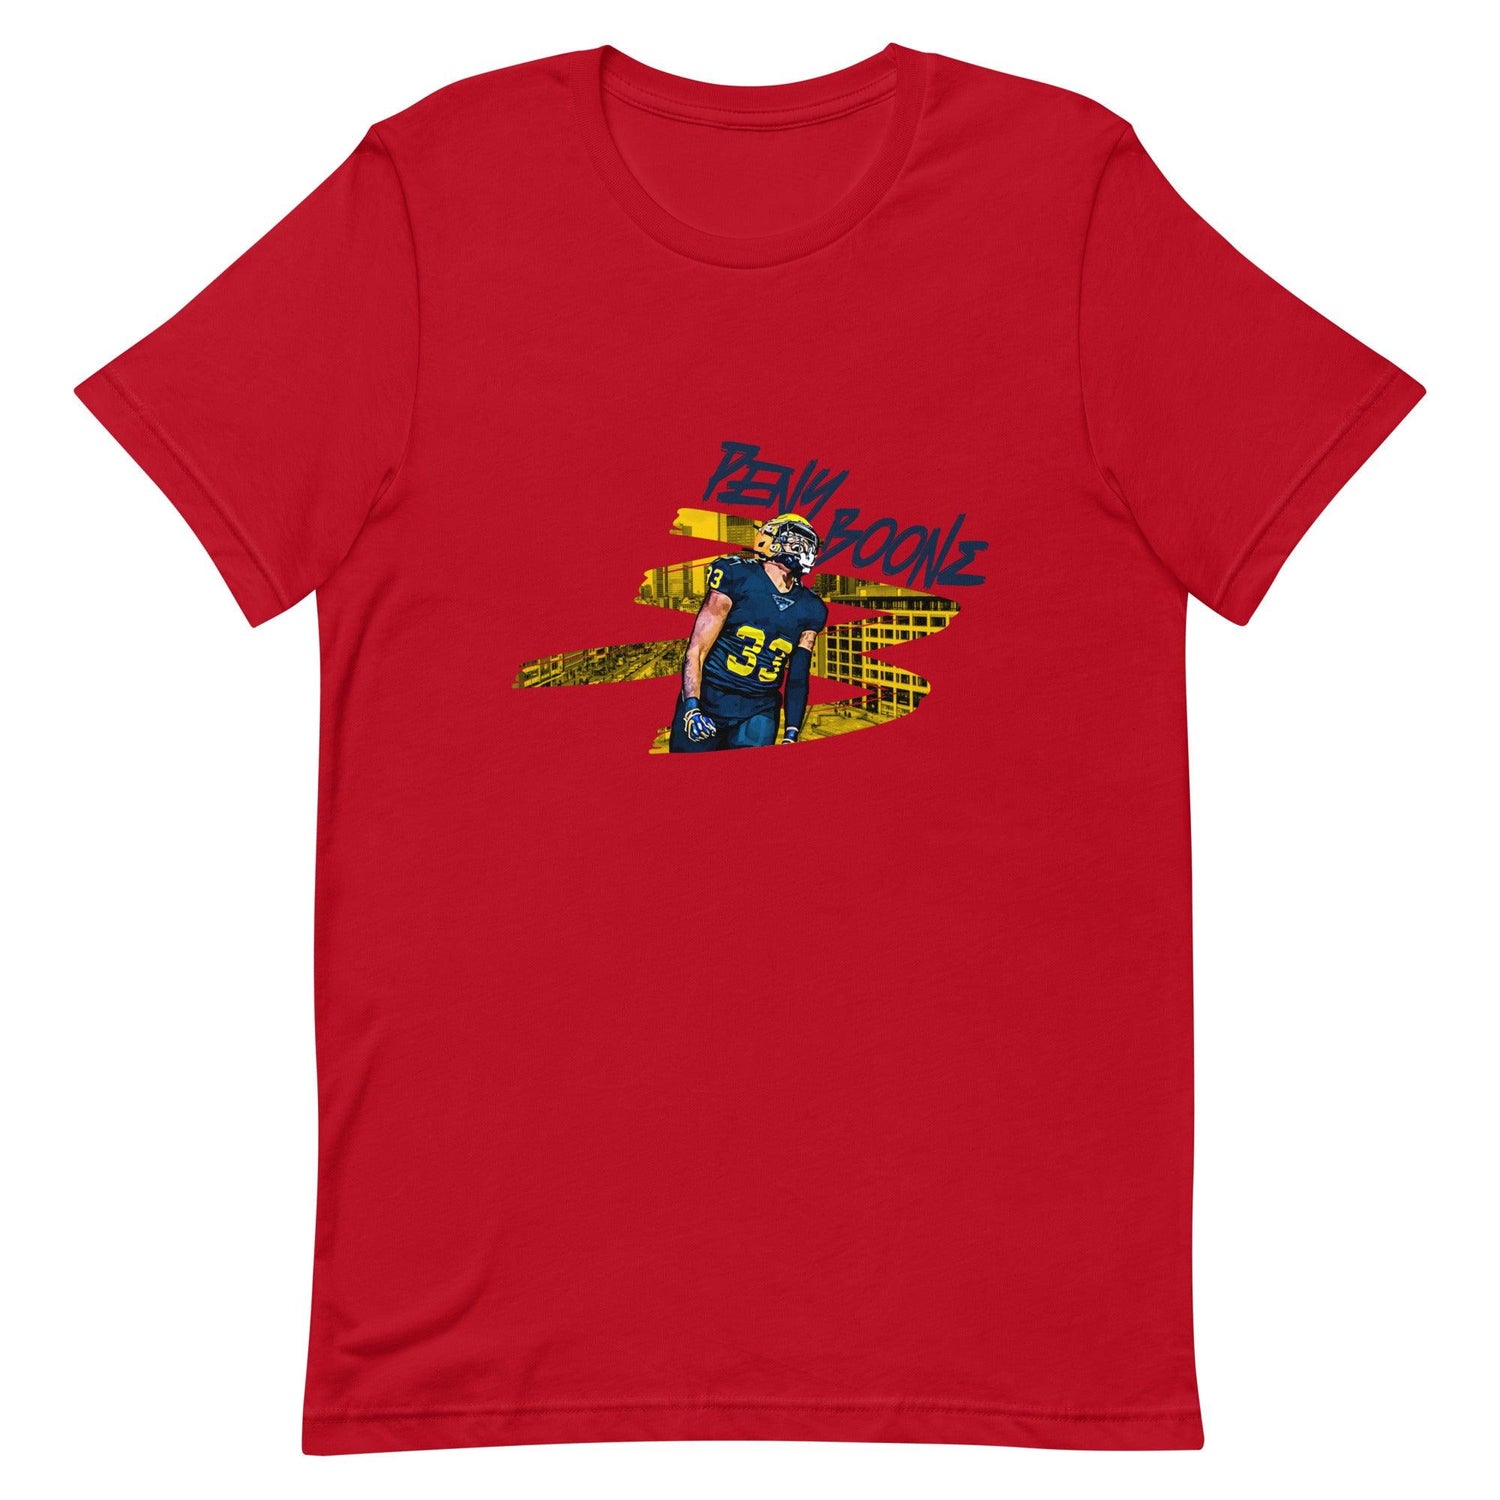 Peny Boone "Gameday" t-shirt - Fan Arch